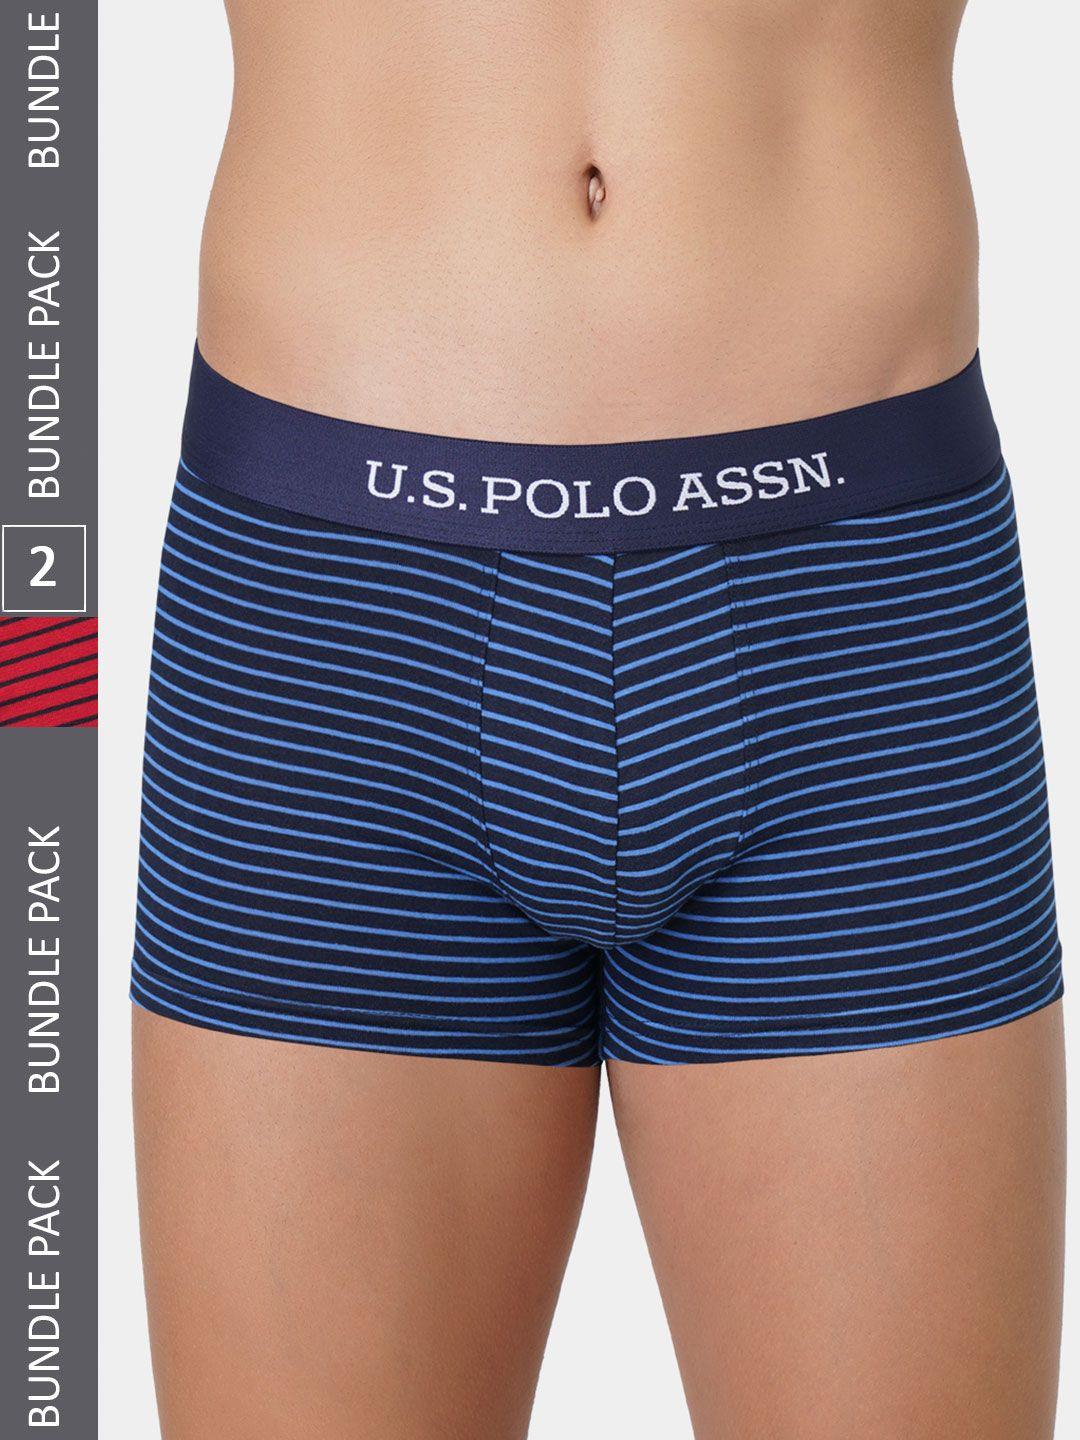 u.s.-polo-assn.-men-pack-of-2-striped-trunks